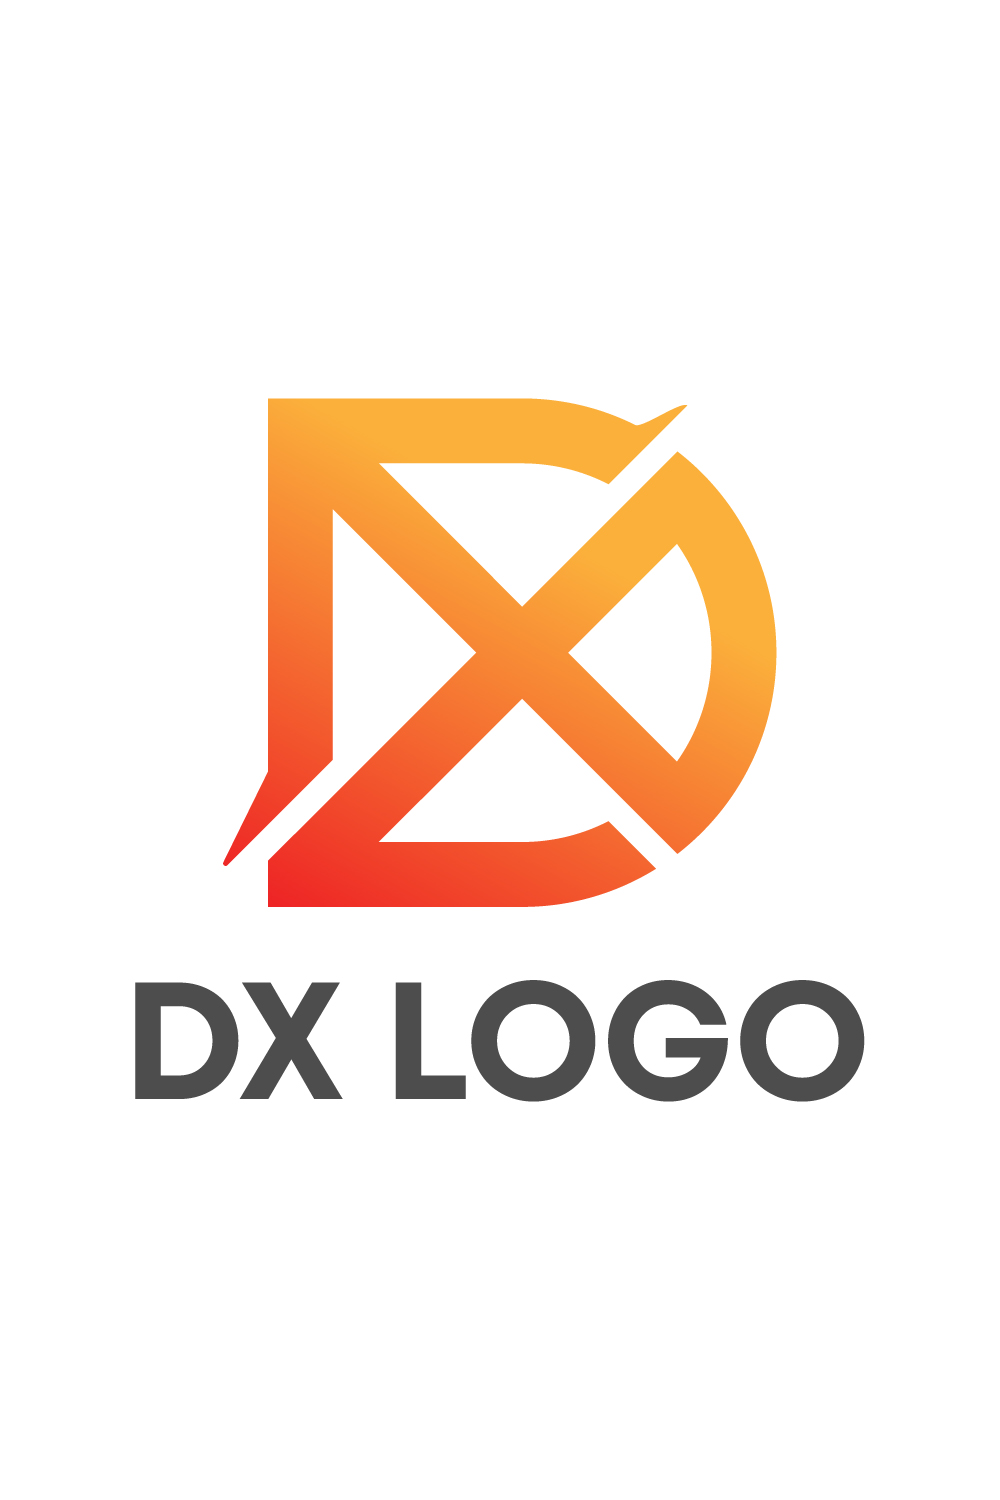 DX logo pinterest preview image.